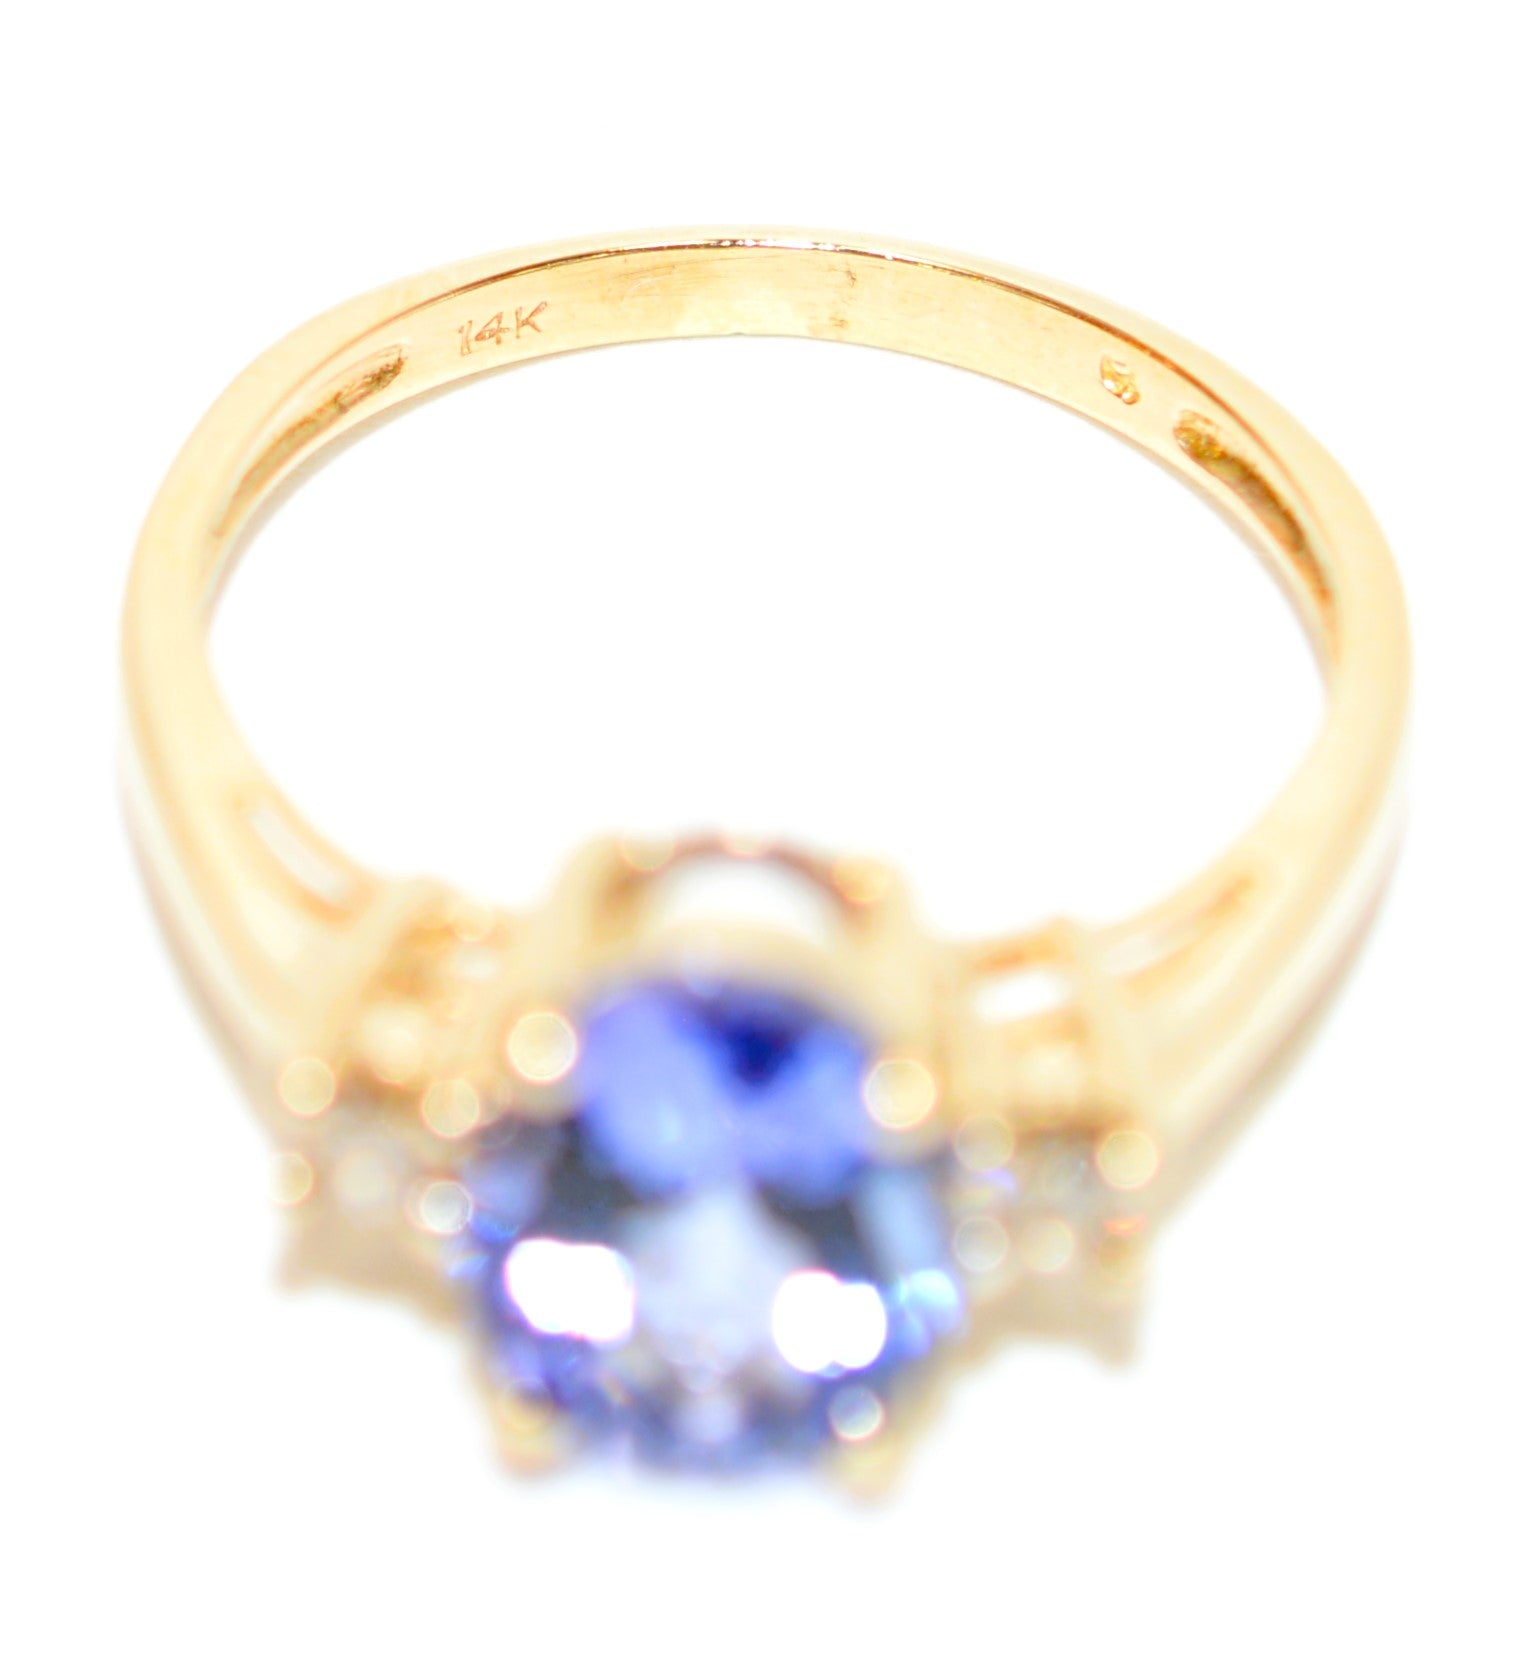 Natural Tanzanite & Diamond Ring 14K Solid Gold 2.78tcw Gemstone Ring Birthstone Ring Engagement Ring Cocktail Ring Estate Jewellery Blue